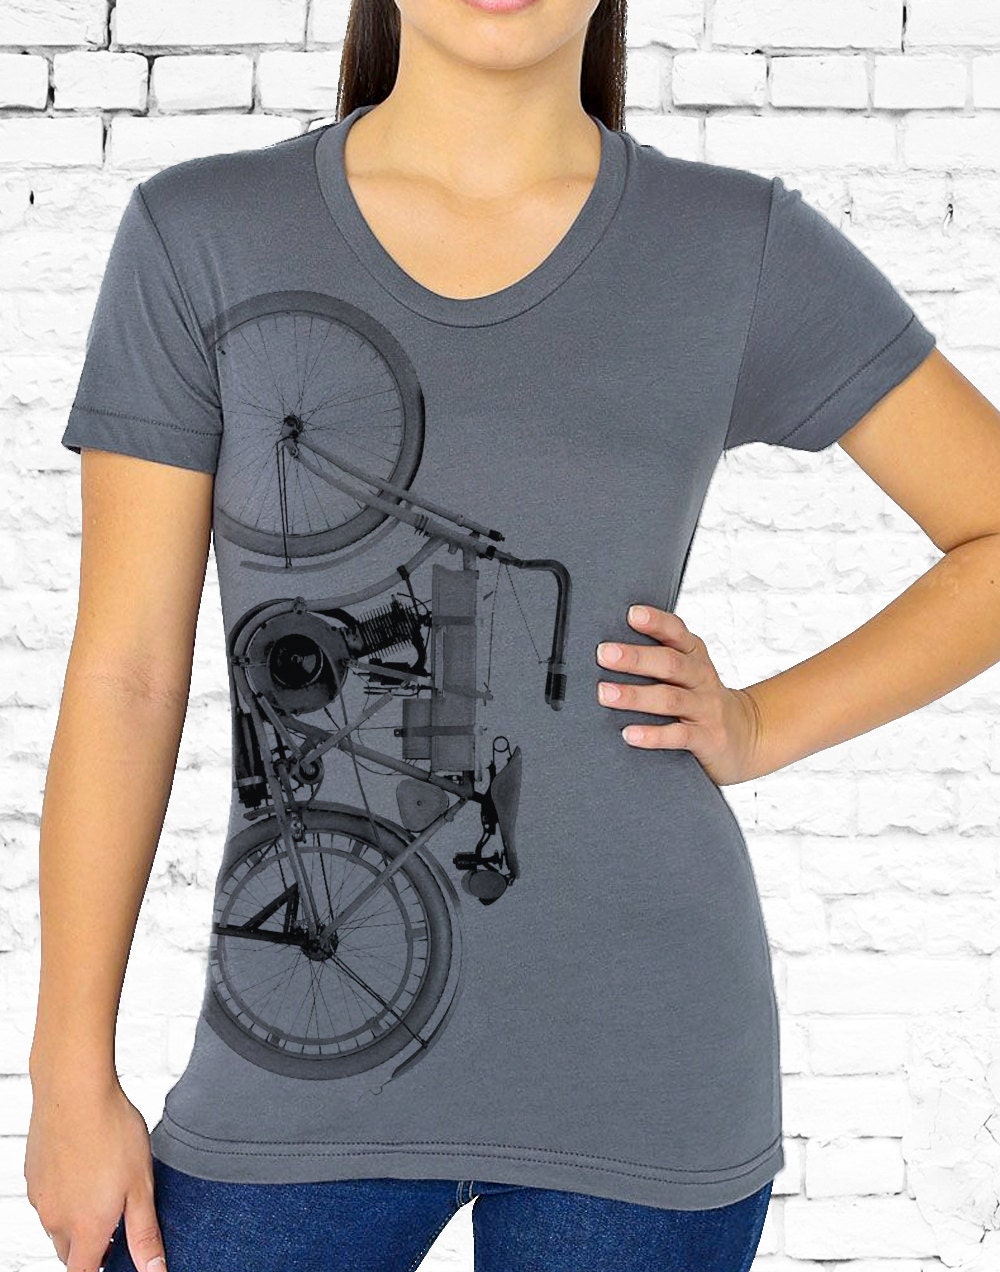 Women's Vintage Motorcycle T-Shirt Women's by CrawlspaceStudios